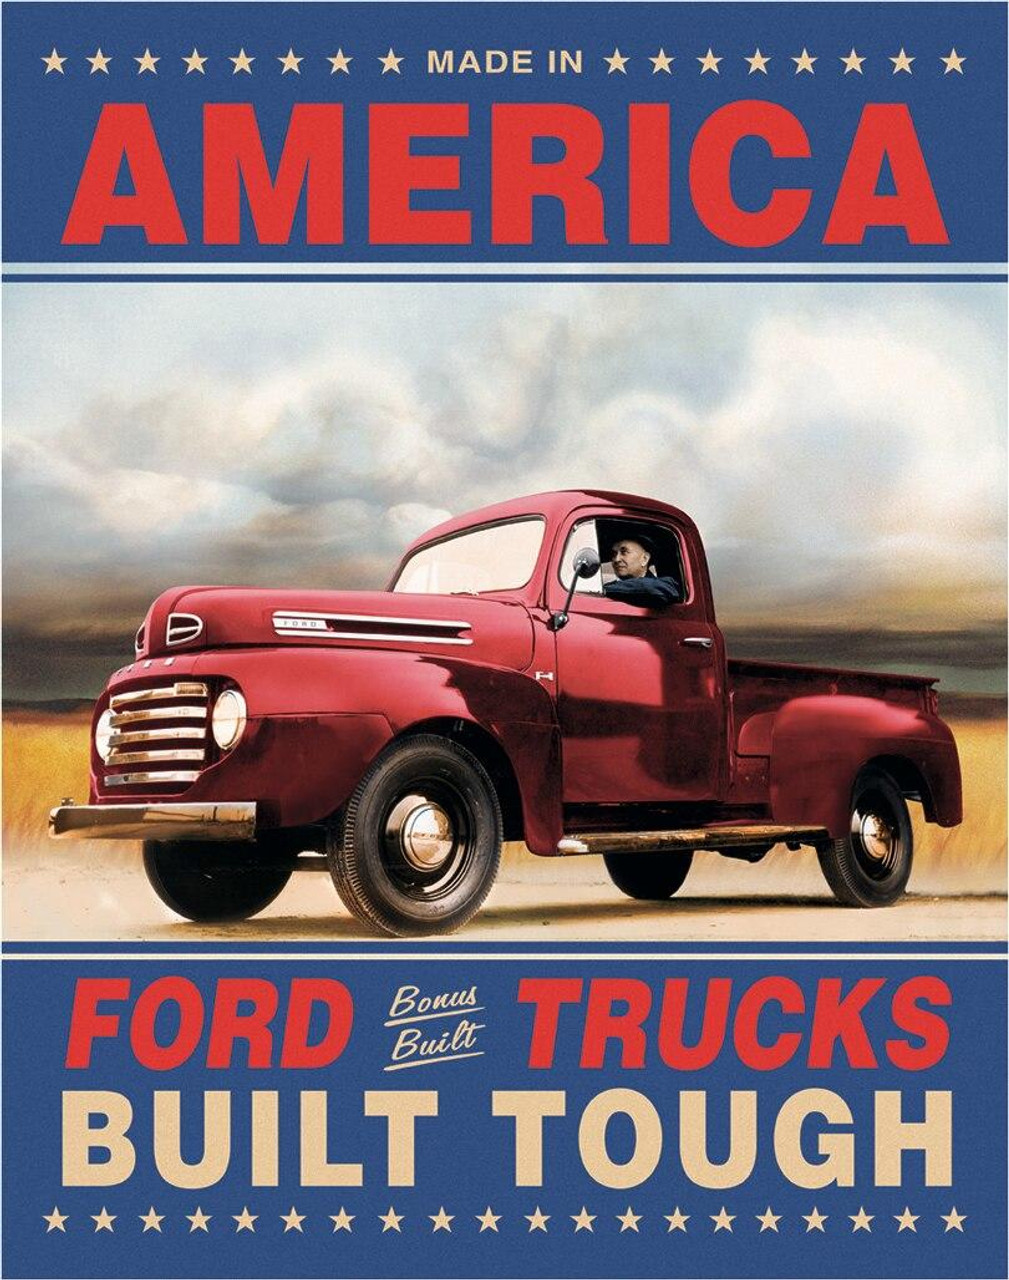 Built tough ford  Built ford tough, Ford logo, Ford